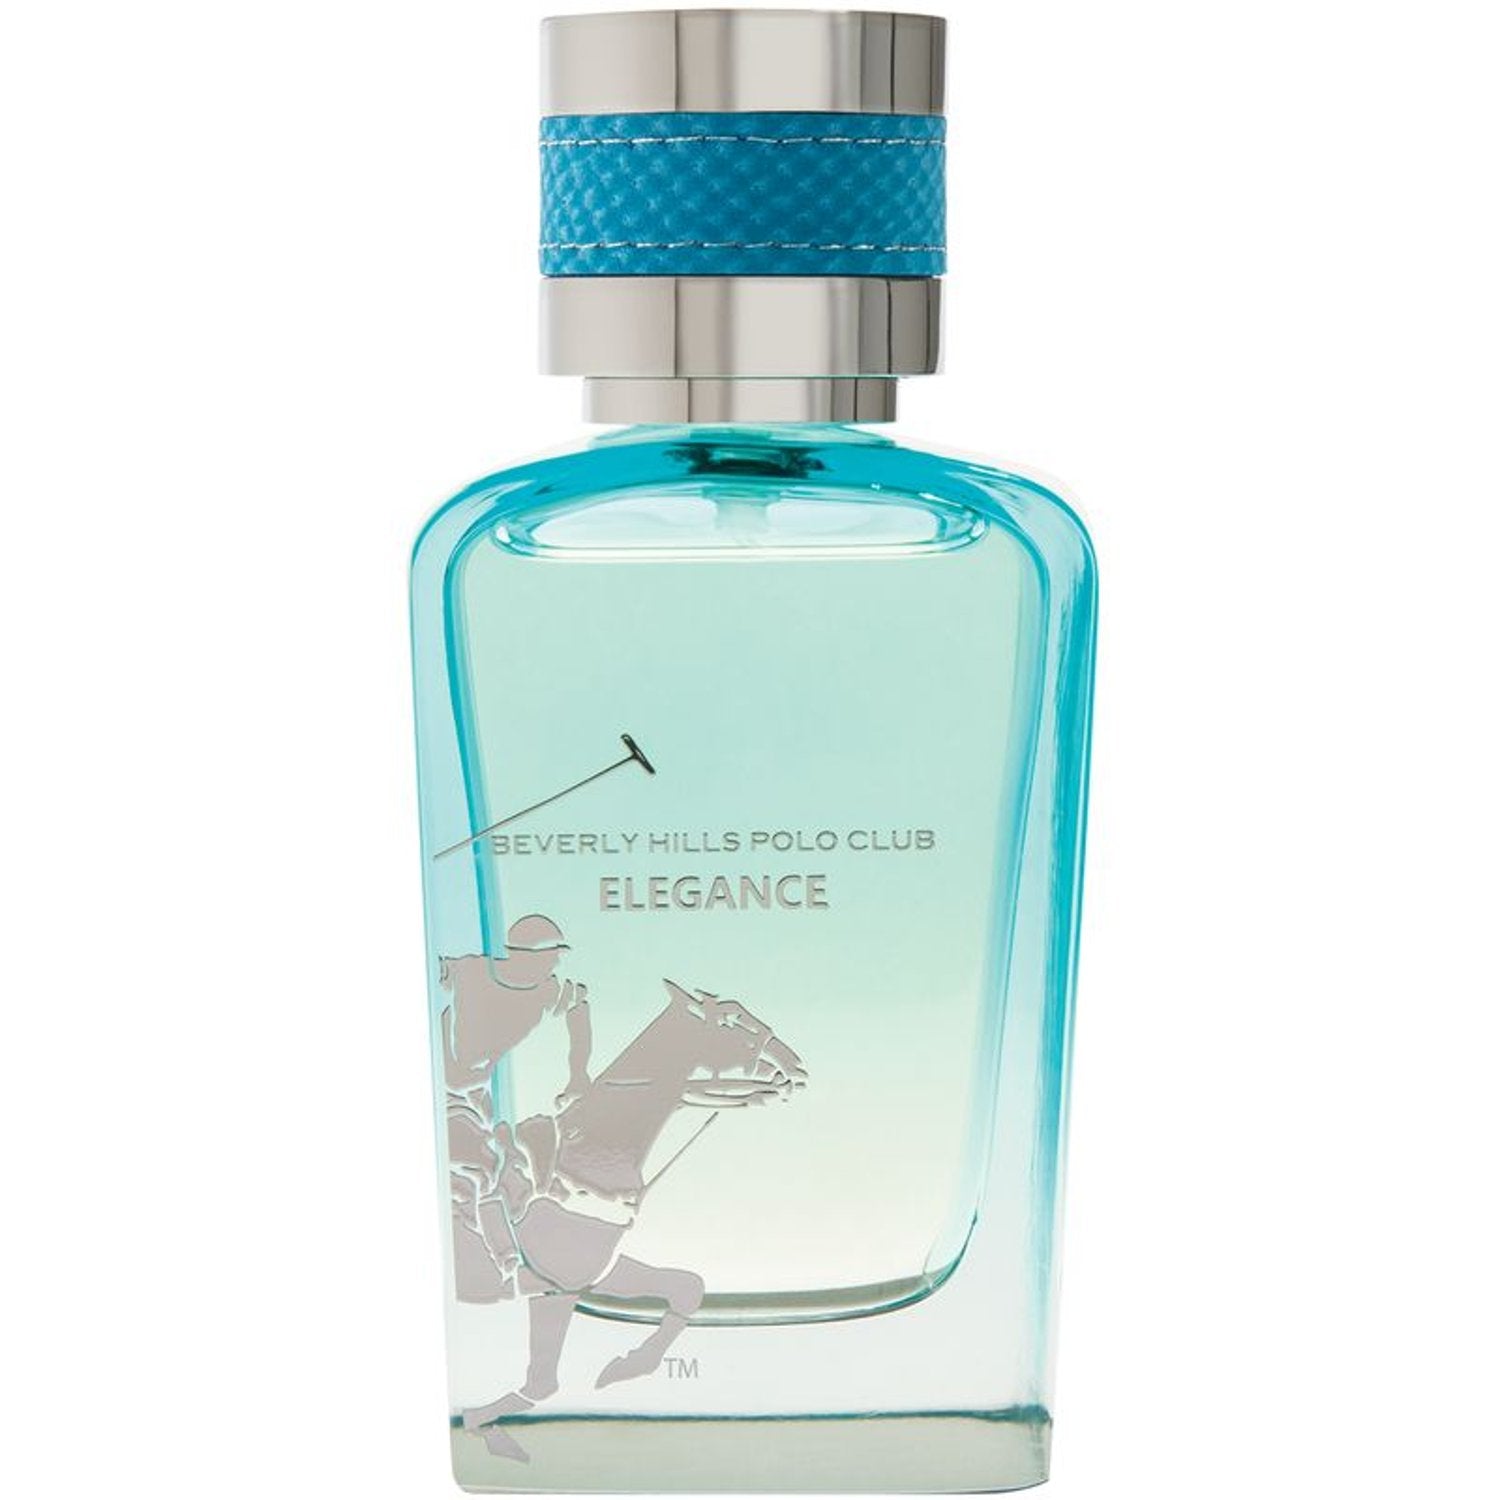 Beverly Hills Polo Club Elegance Perfume Online in Bahrain - Halabh